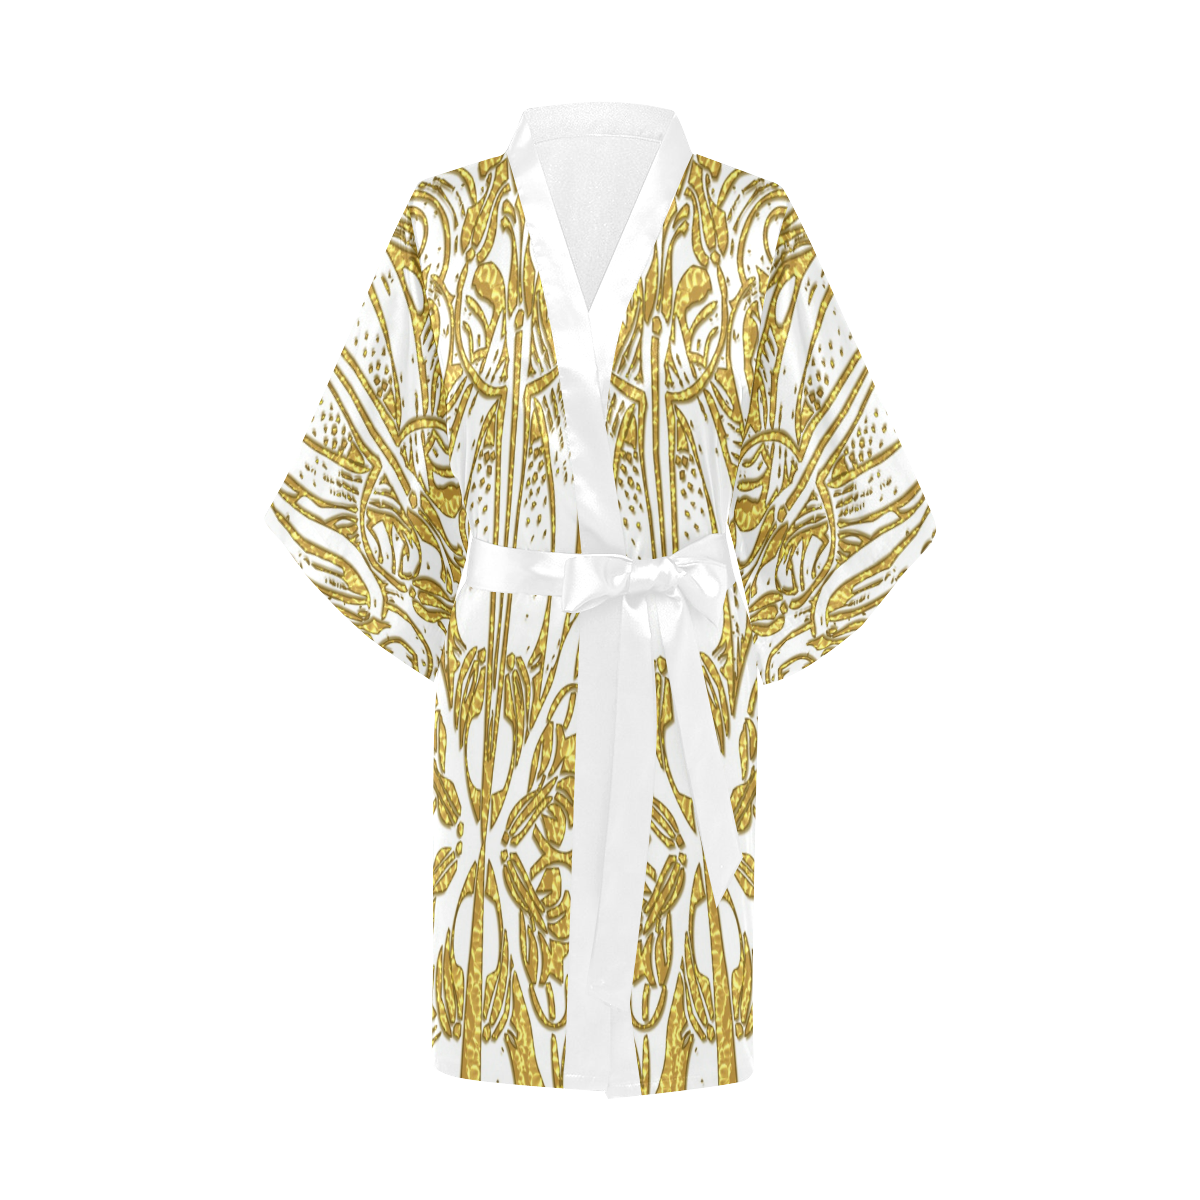 Lace Gold Kimono Robe